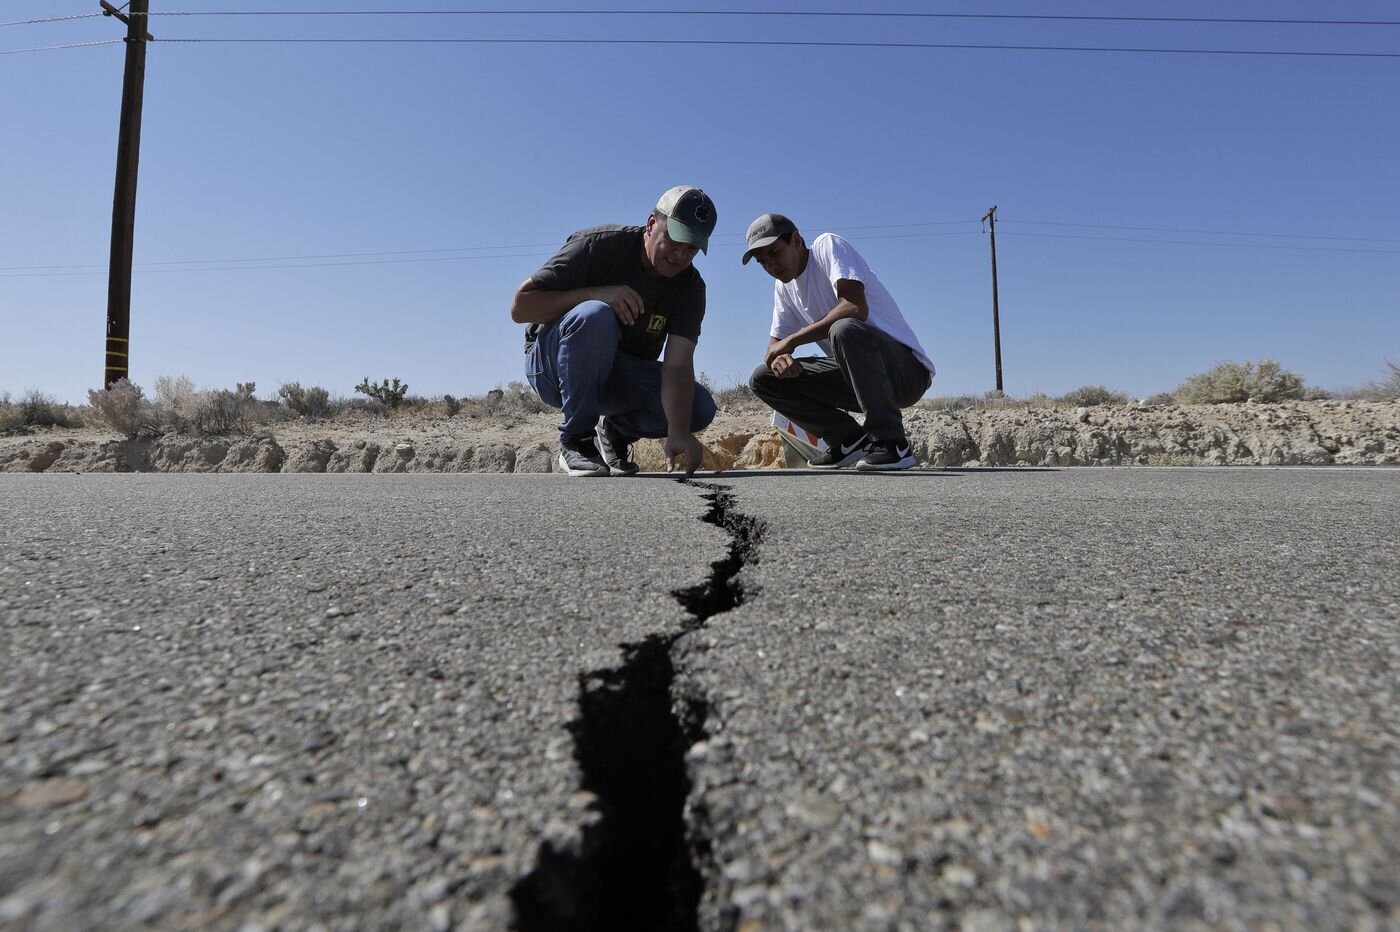 More information about "Πάνω από 2.000 δηλώσεις ζημιών από τον σεισμό στην Αττική"